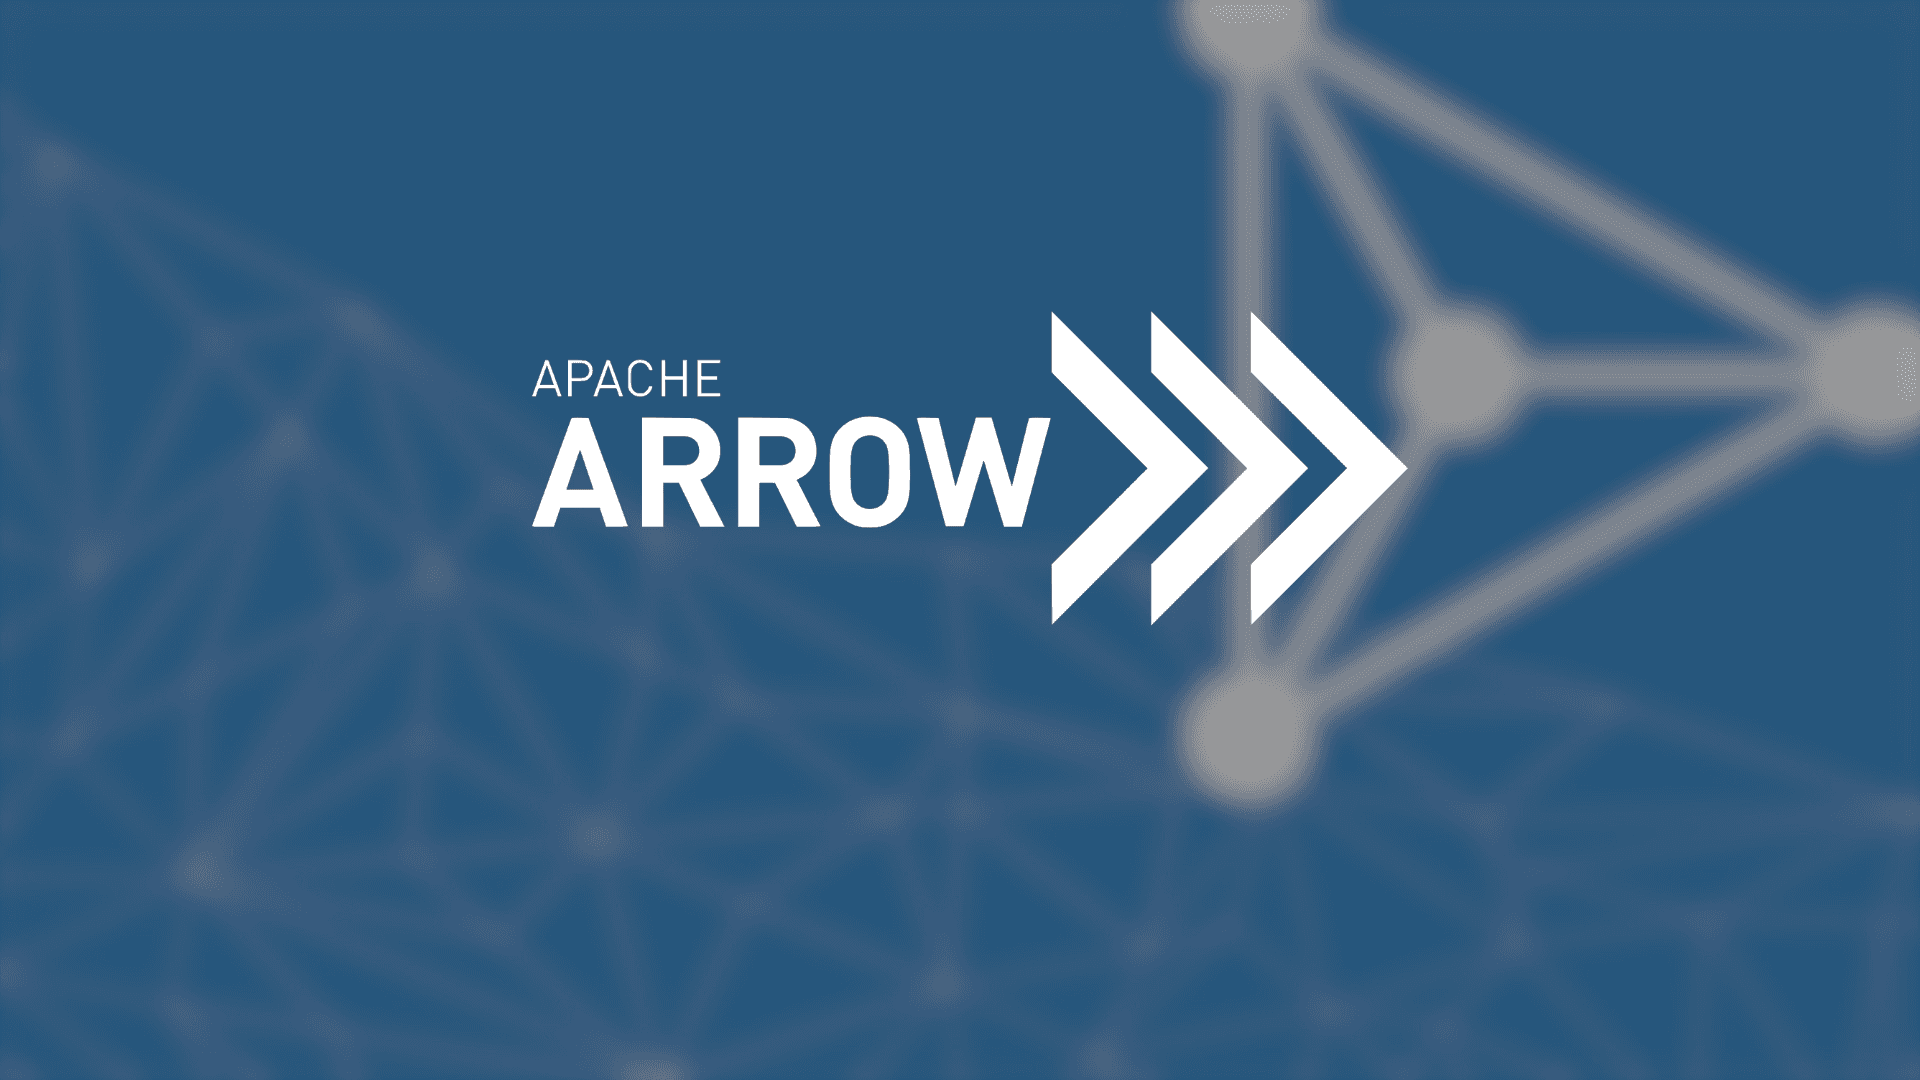 Apache Arrow package logo hero image